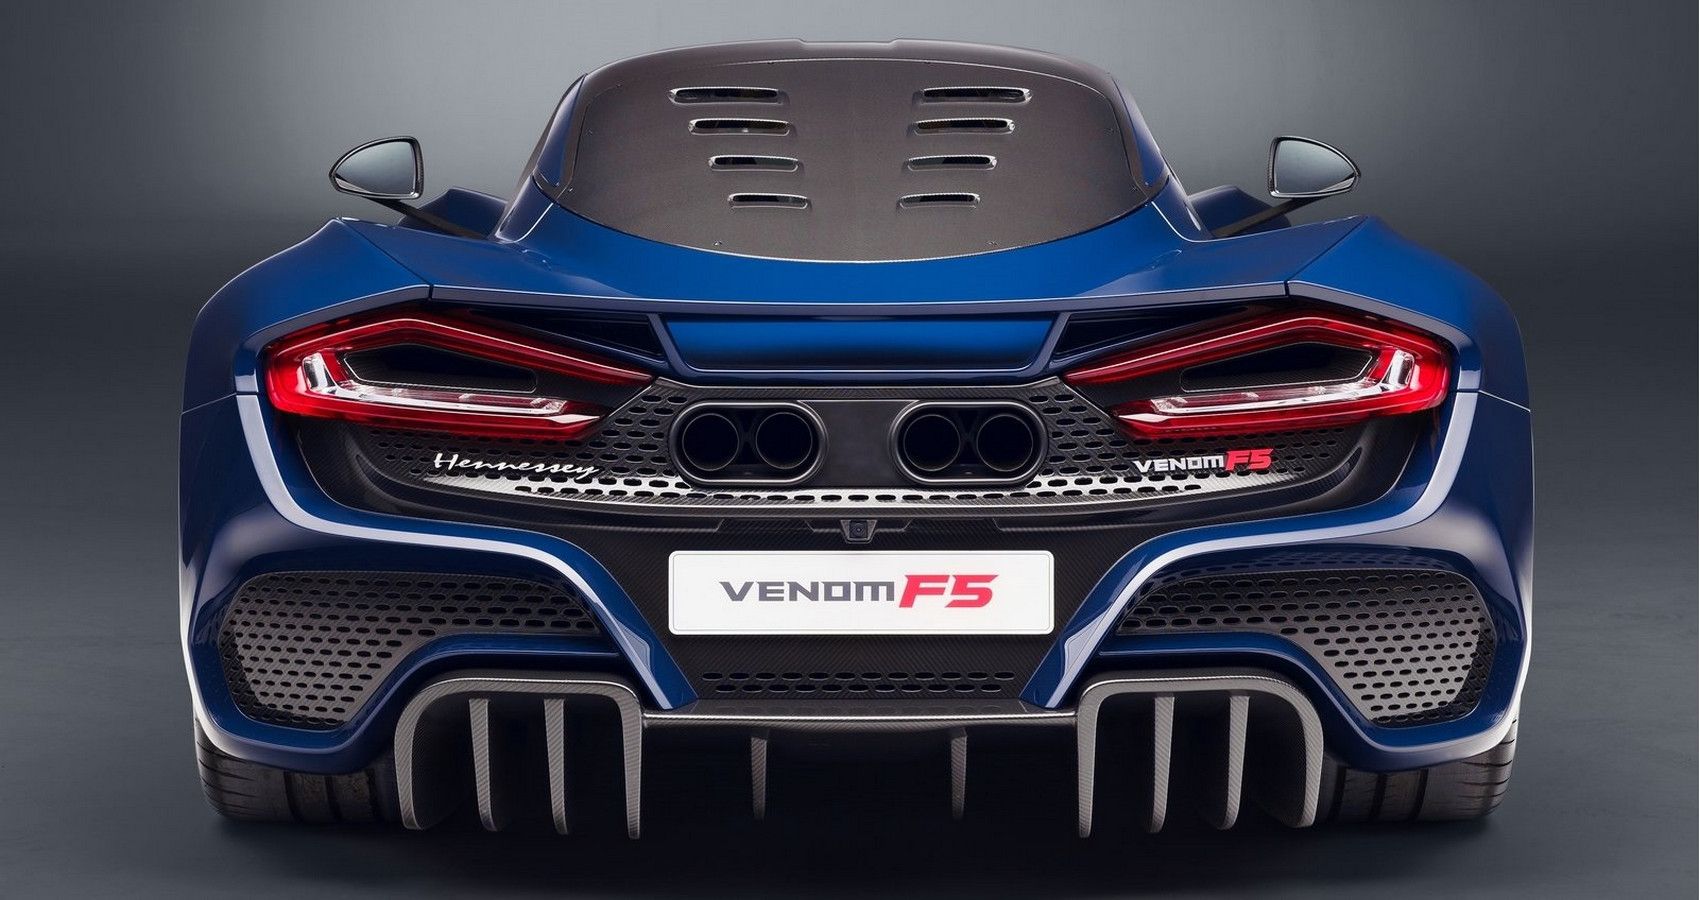 Venom F5 Rear Aero Details